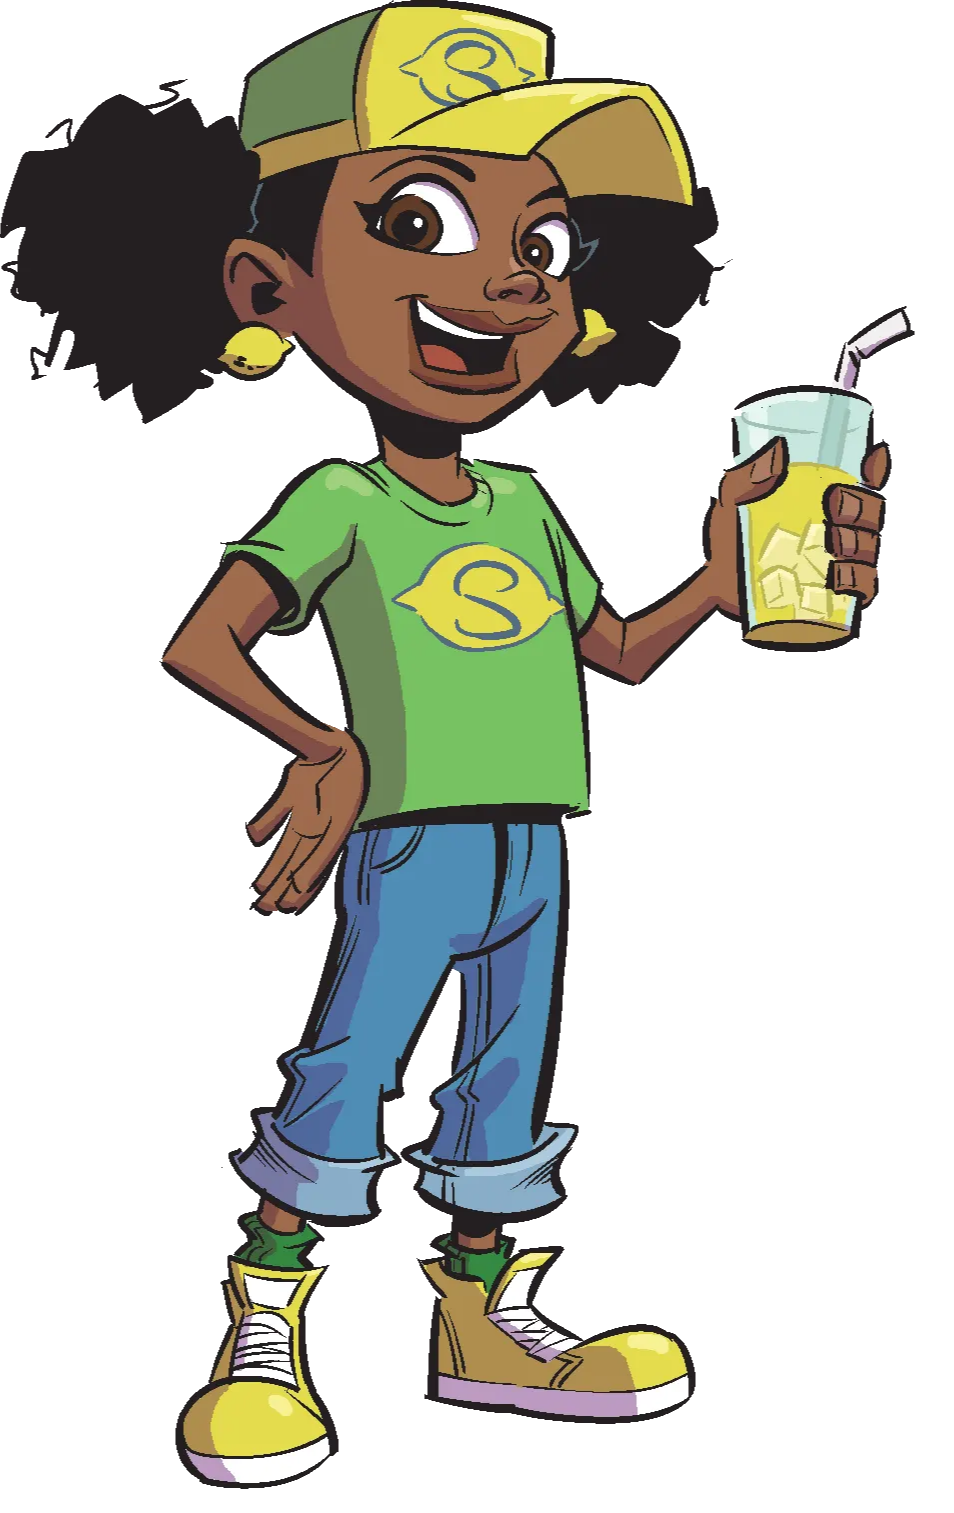 Cartoon of a young girl drinking lemonade